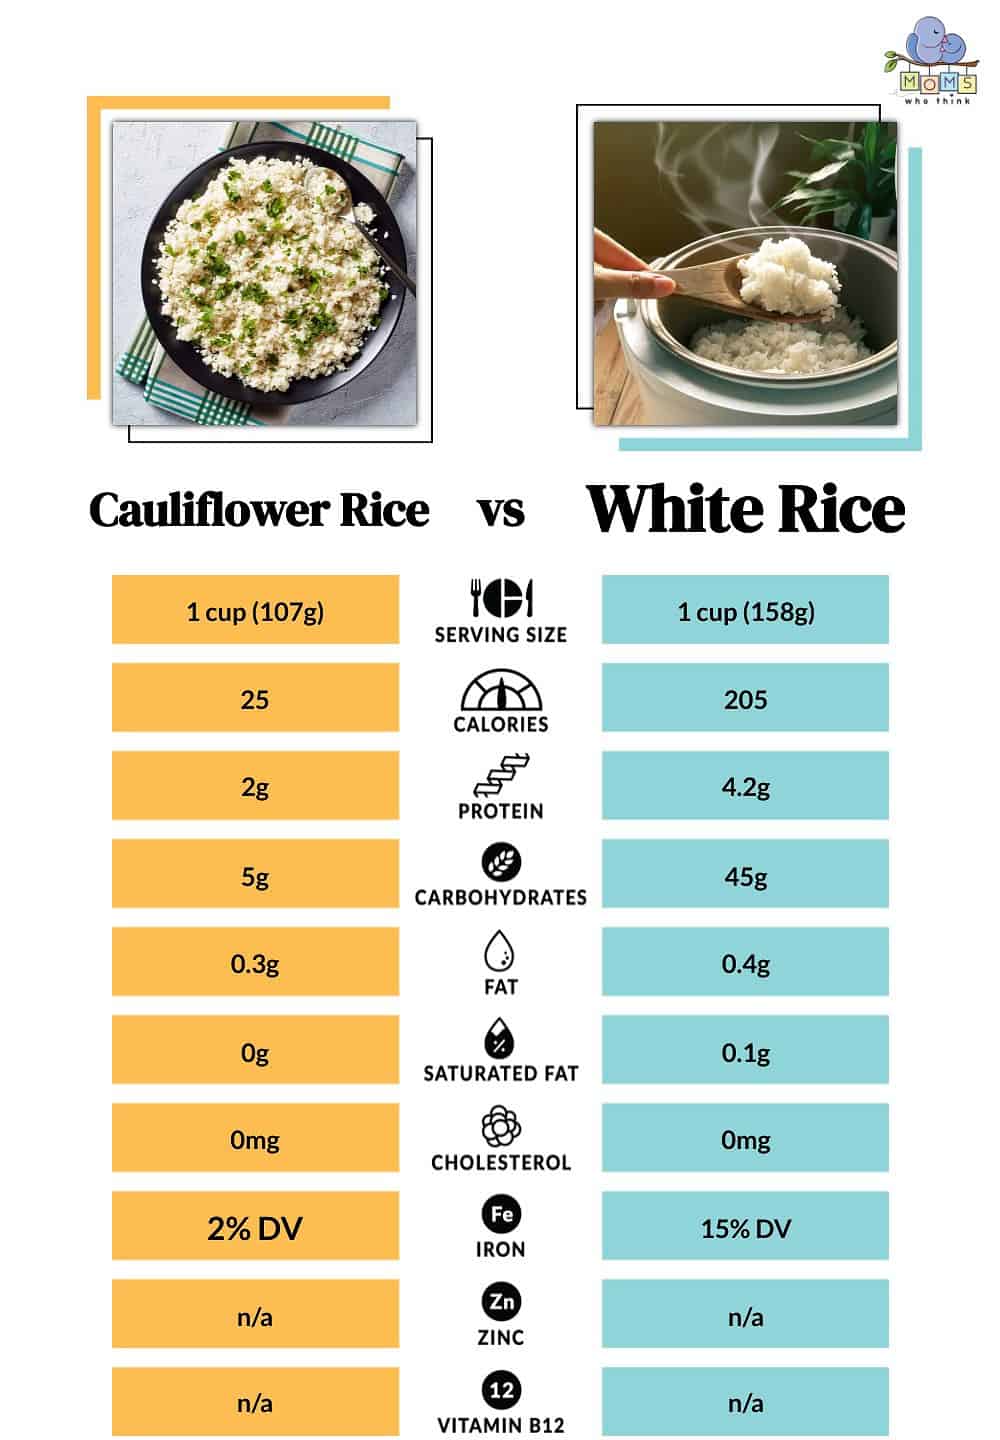 Cauliflower Rice vs White Rice Nutritional Facts